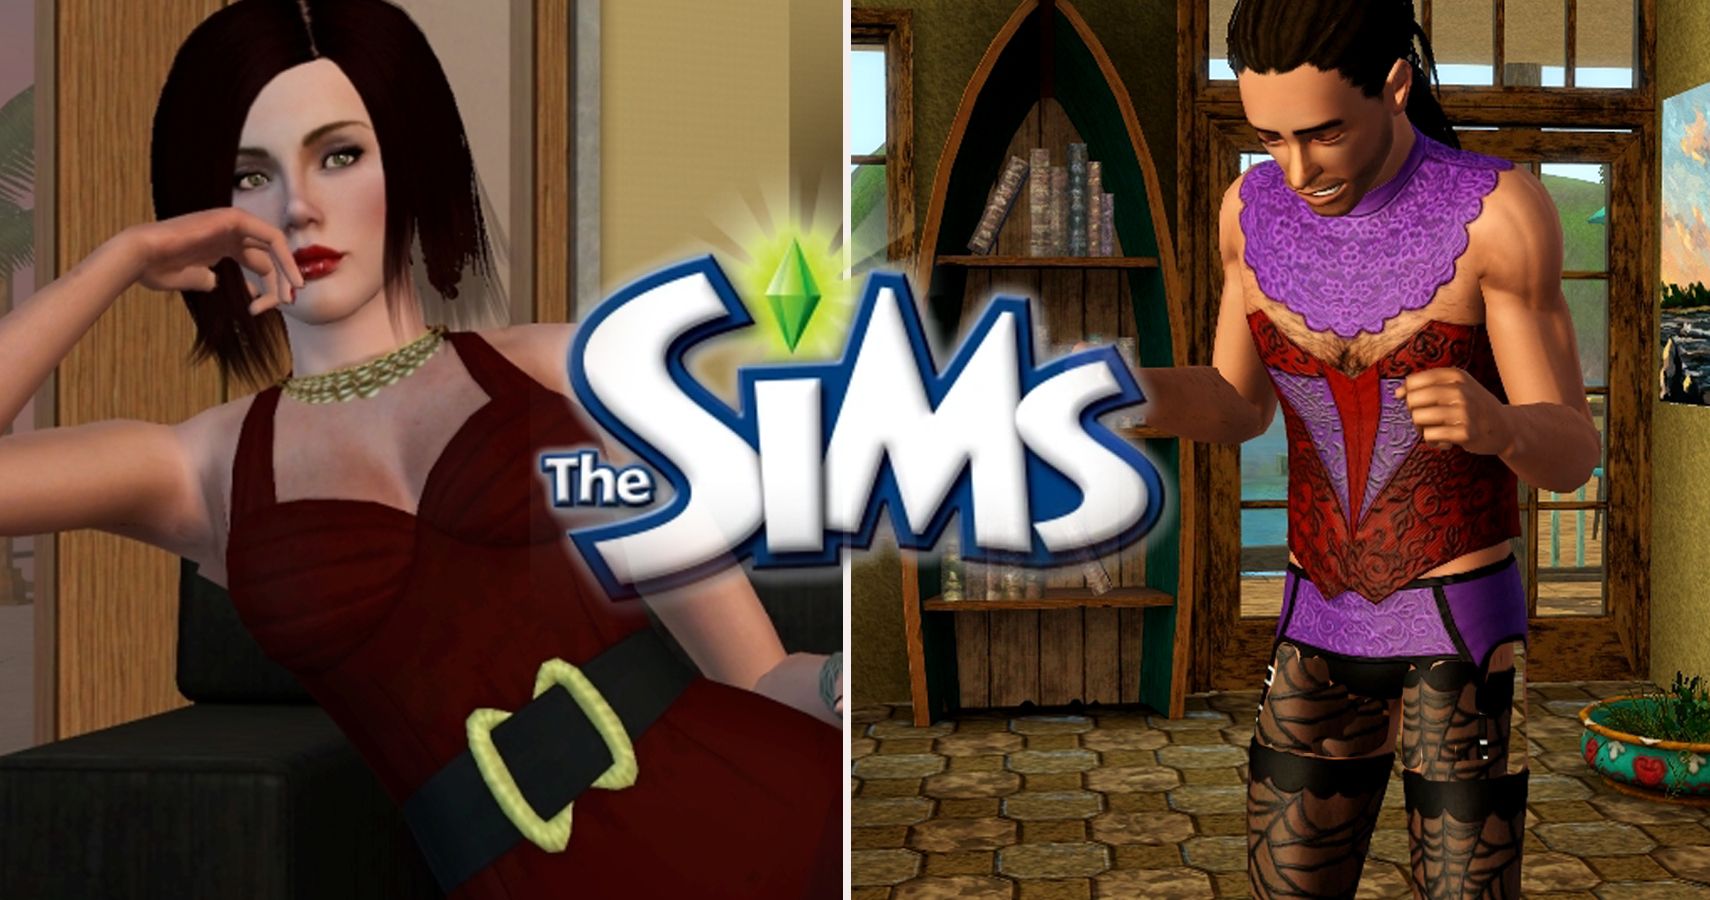 Sims 4 Serial Killer Mod Update.